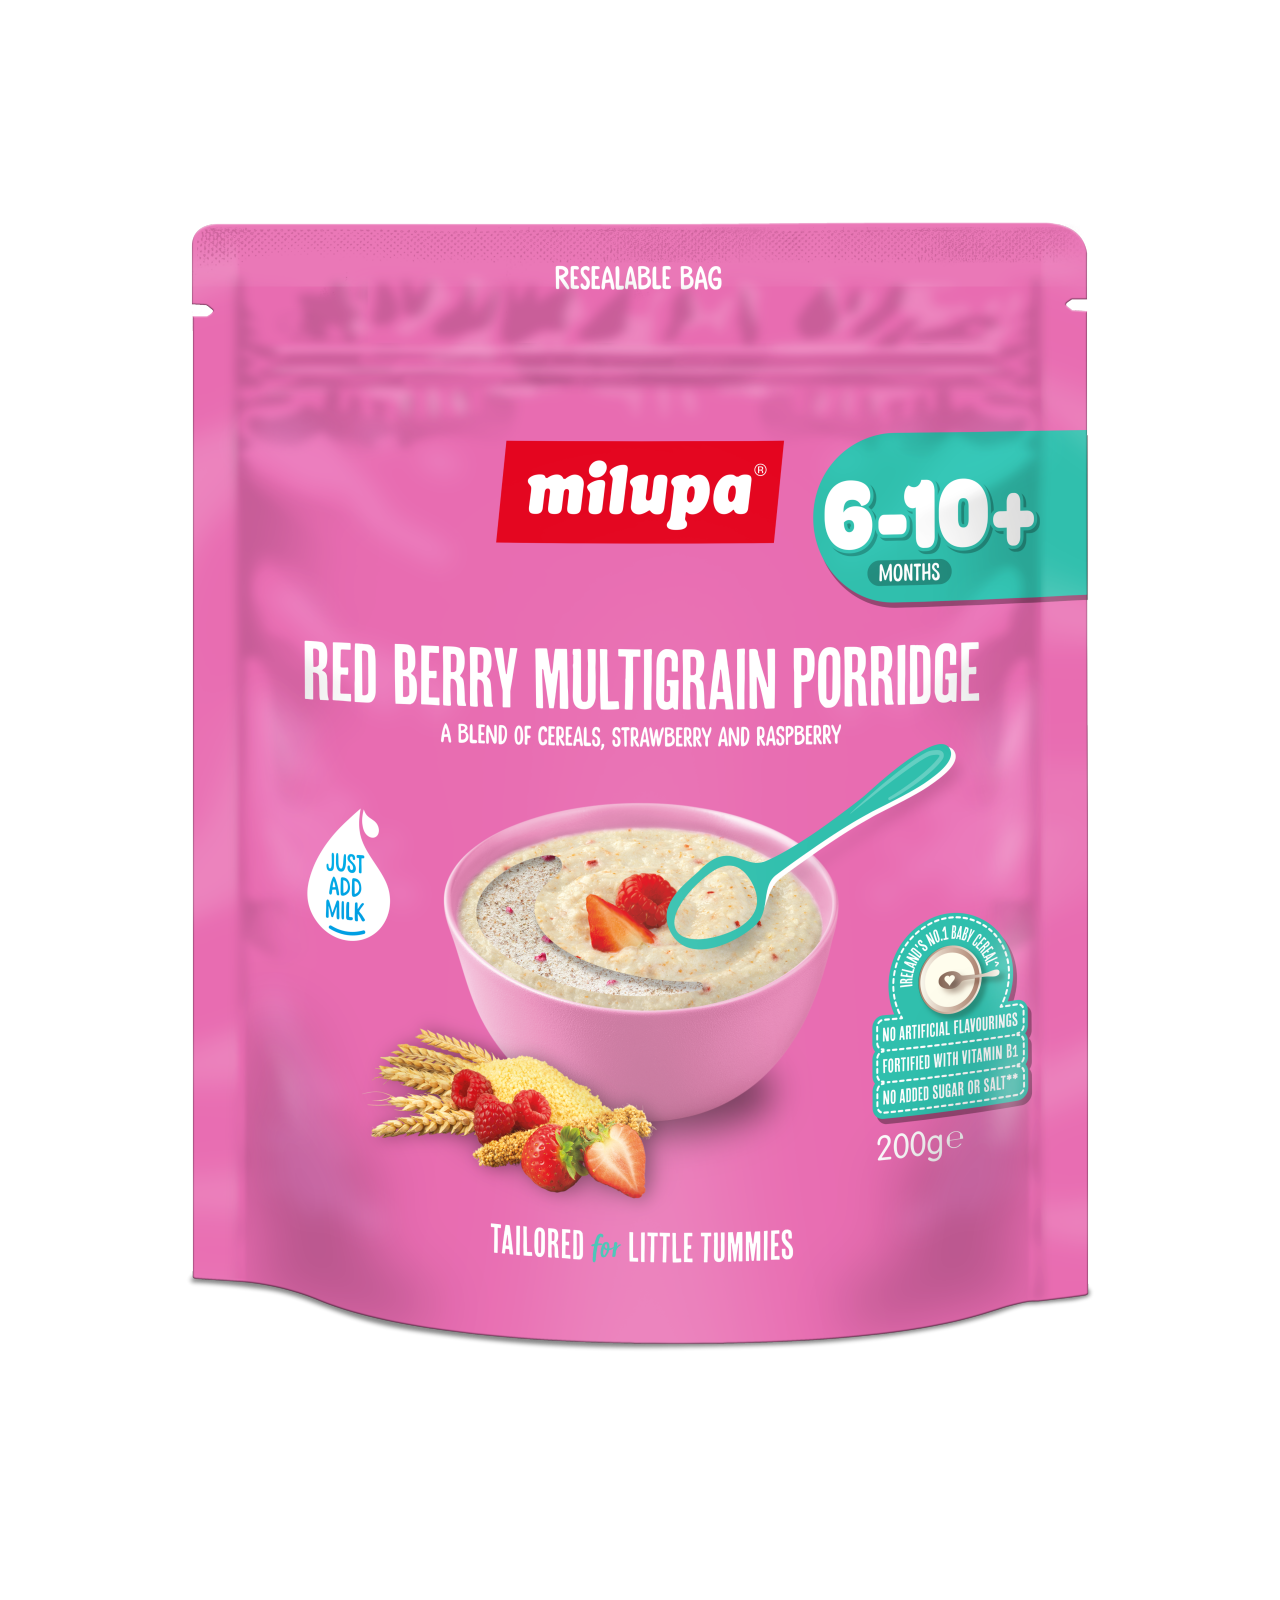 Red berry multigrain porridge